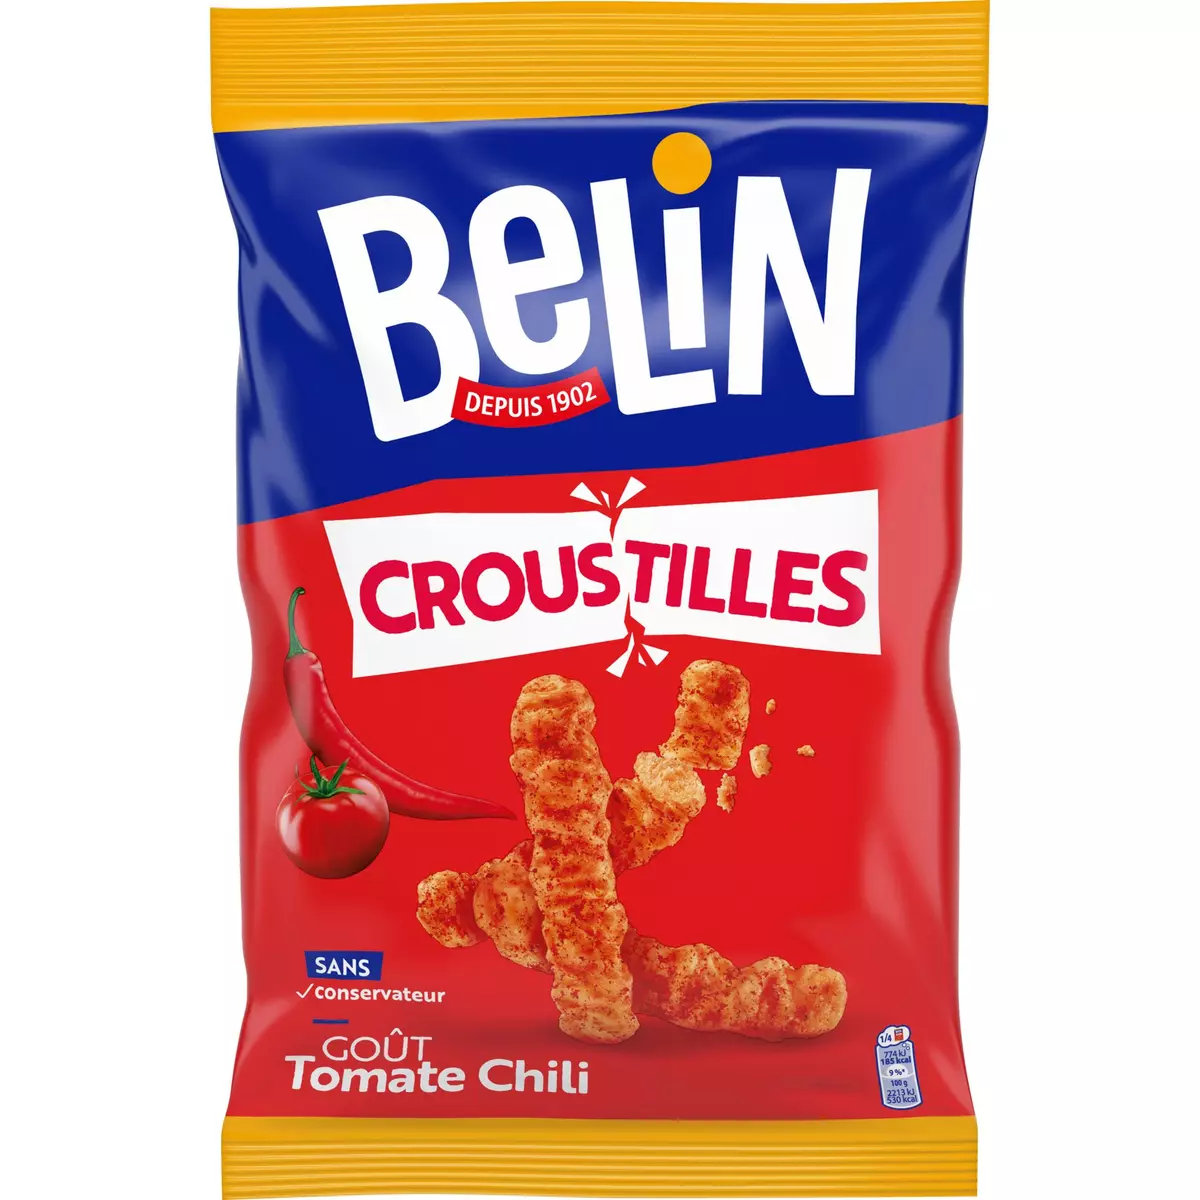 BELIN Biscuits salés croustilles goût tomate chili 138g